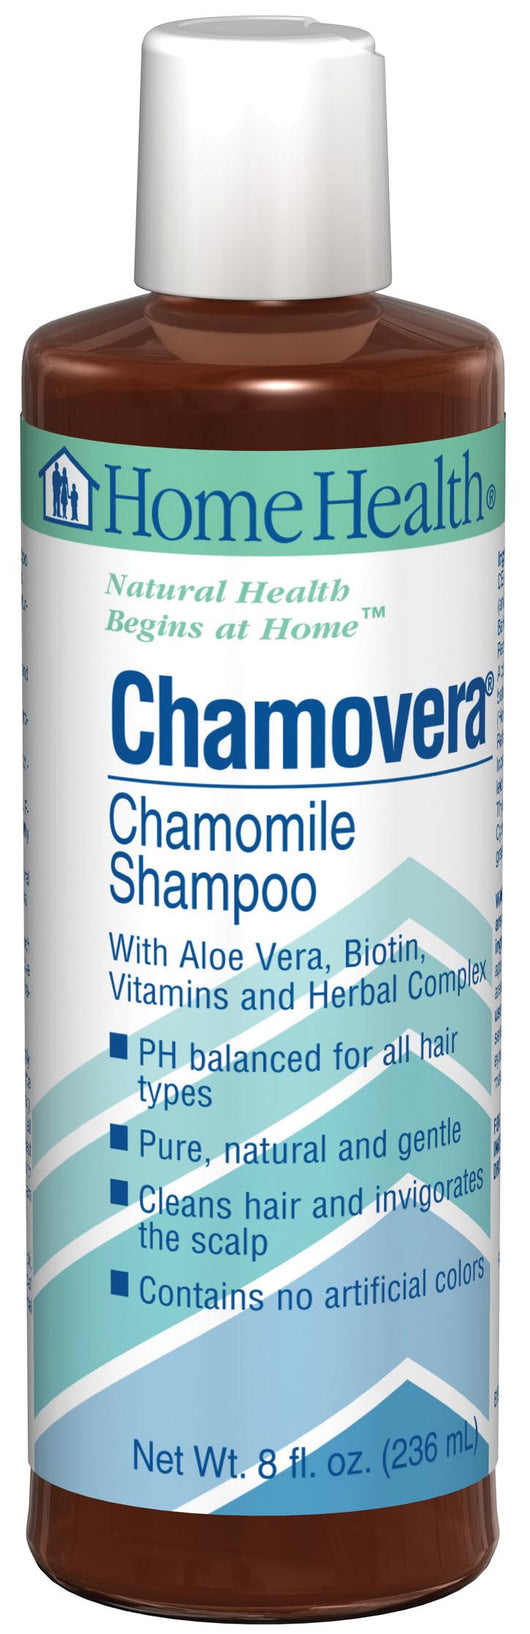 Home Health Chamovera Shampoo - 8 ozs.